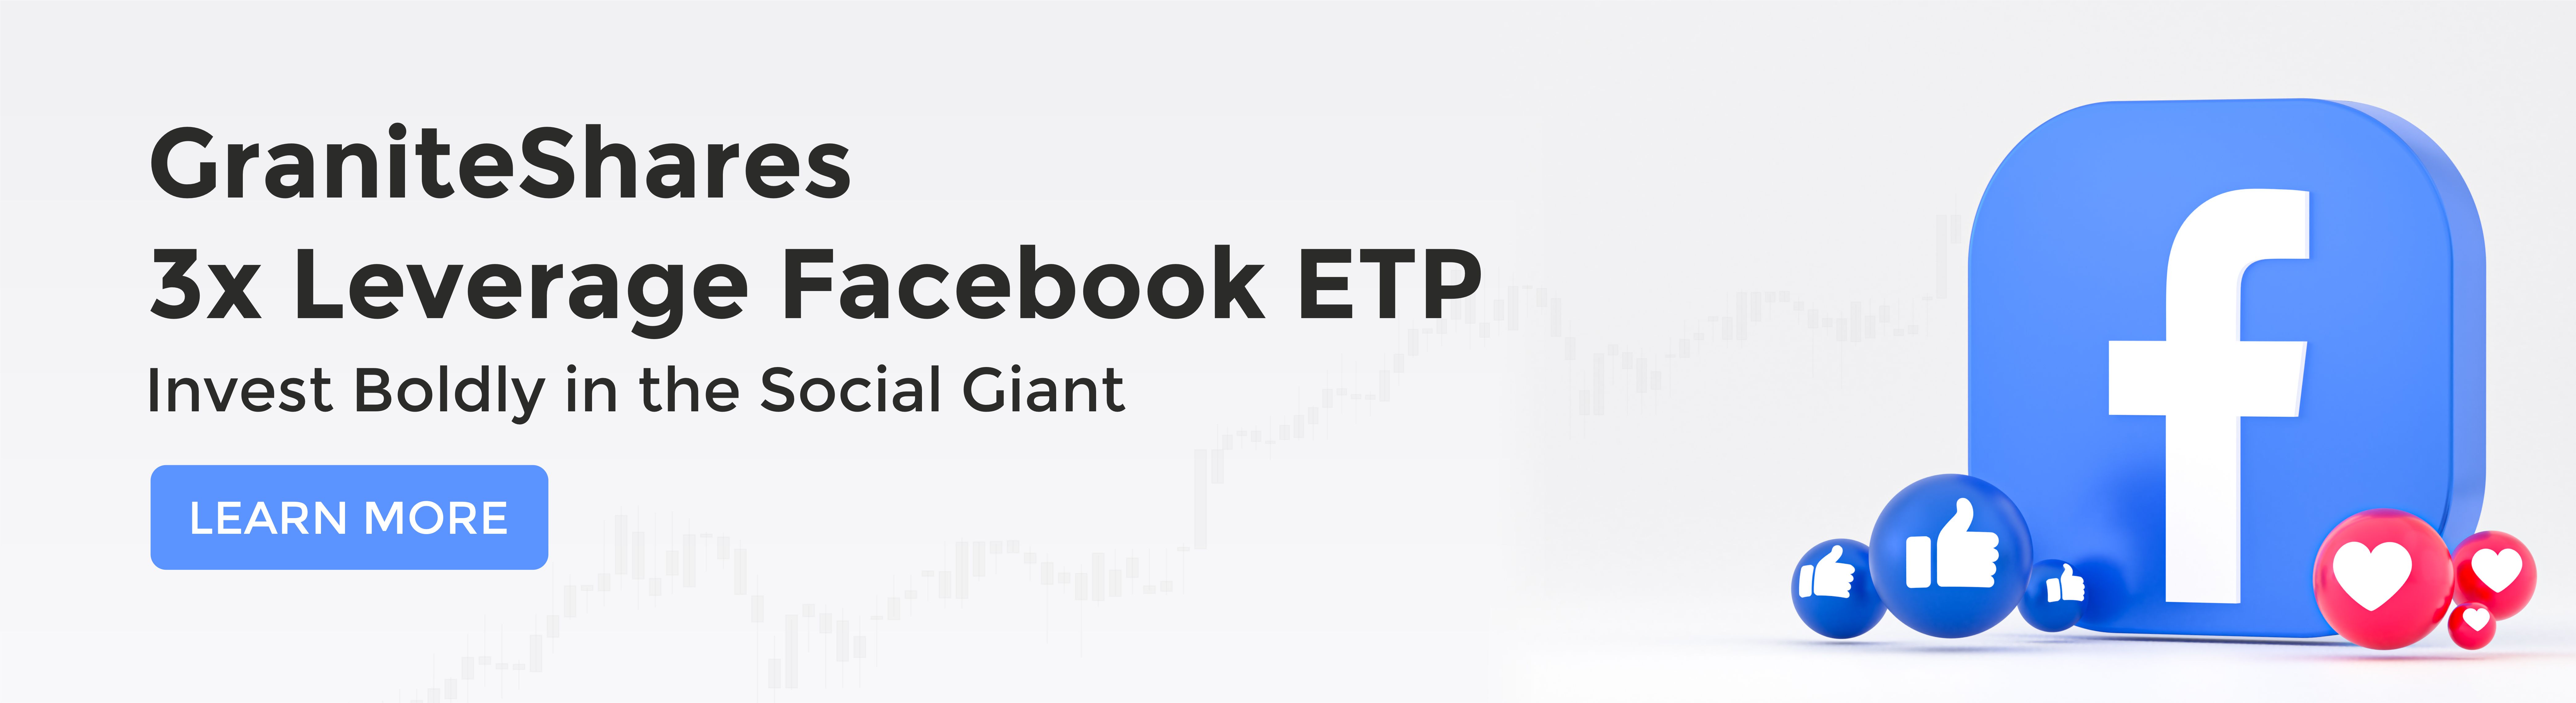 3X Leverage Facebook ETP Web